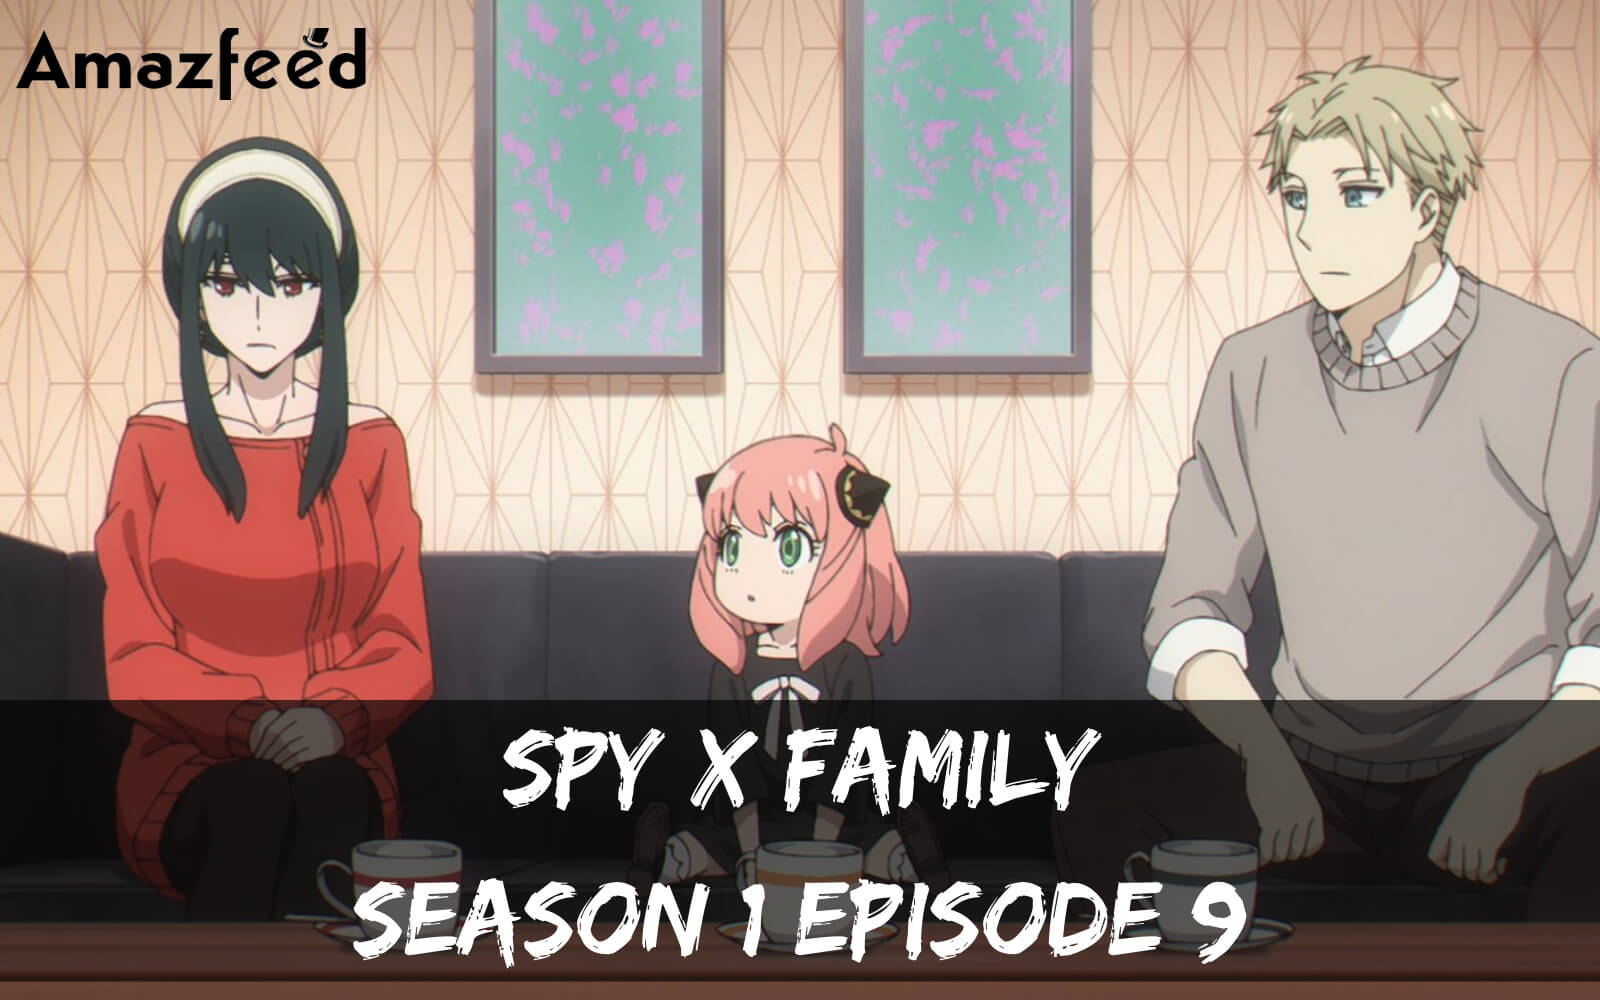 Spy x Family Season 1 Episode 9 release date